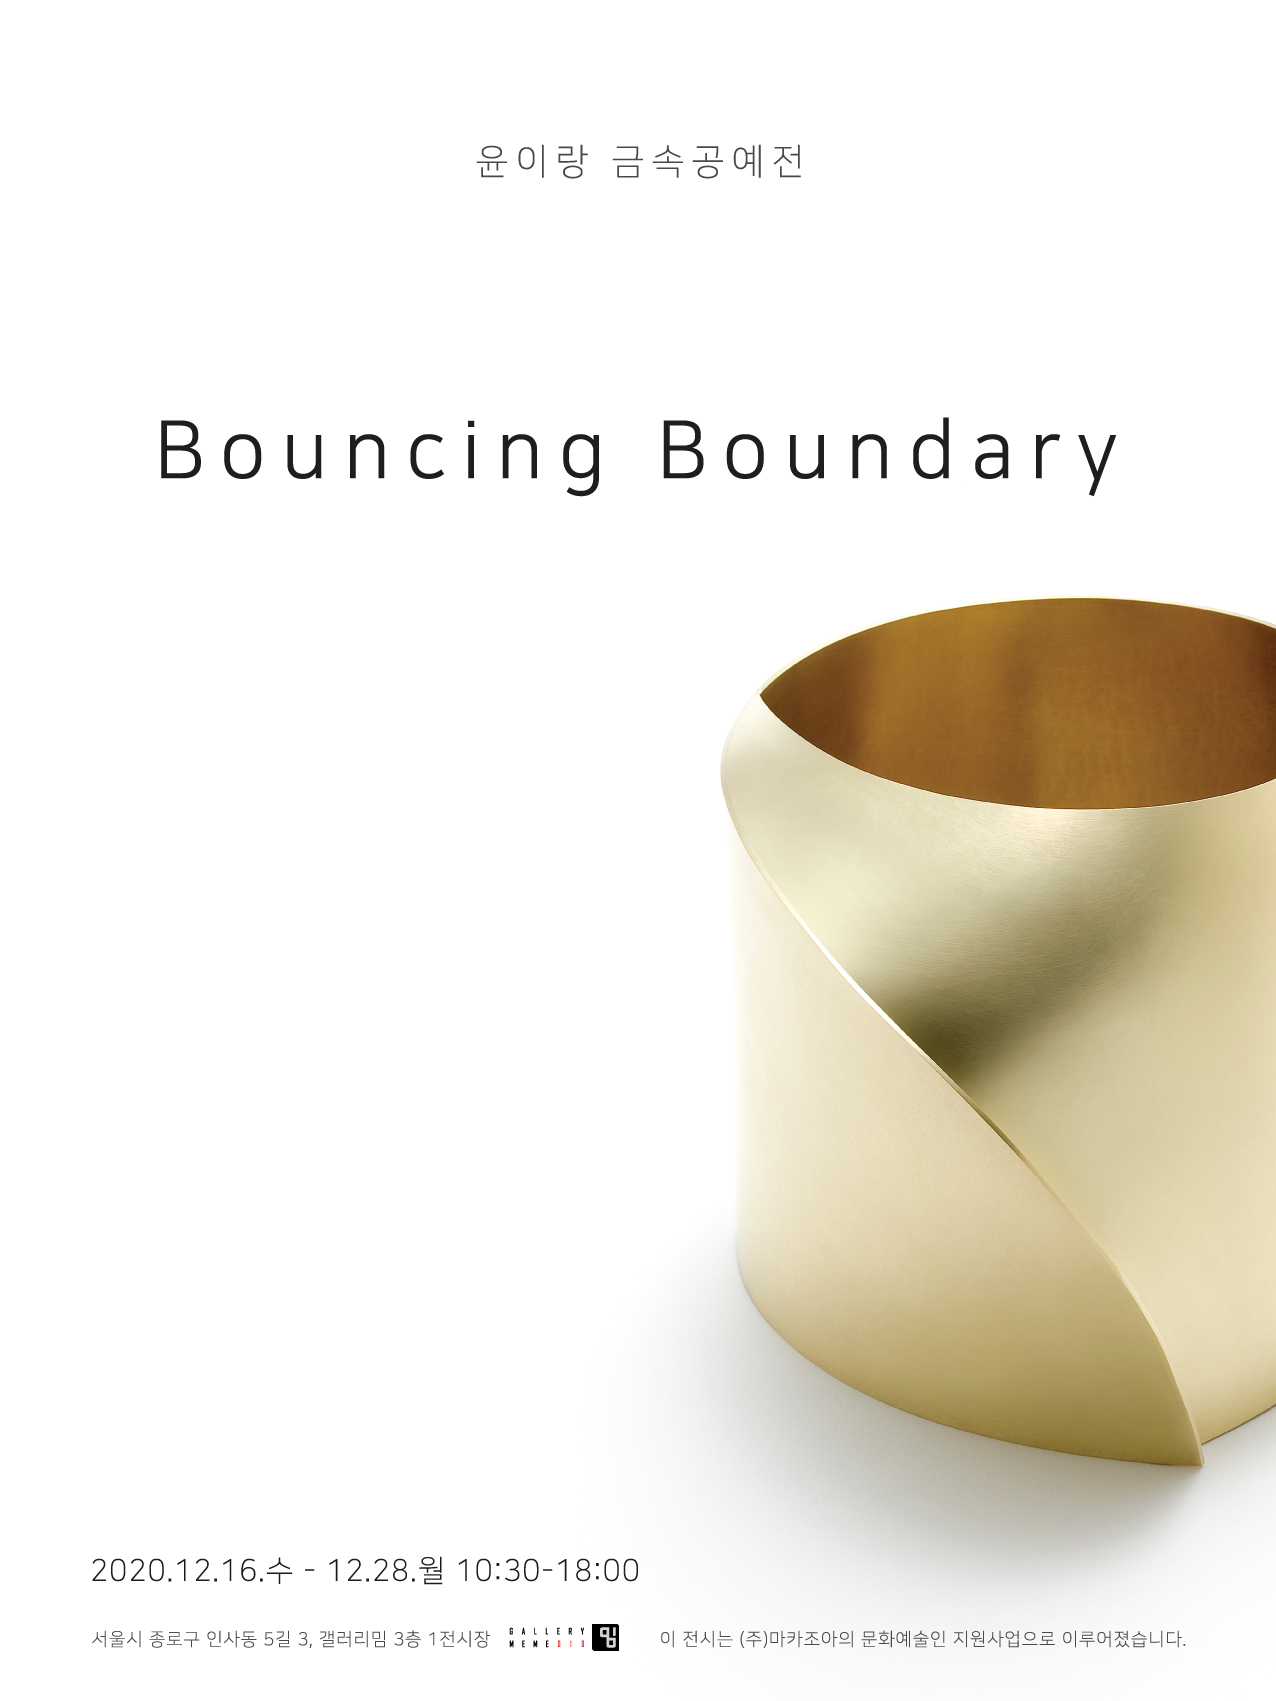 ﻿Bouncing Boundary